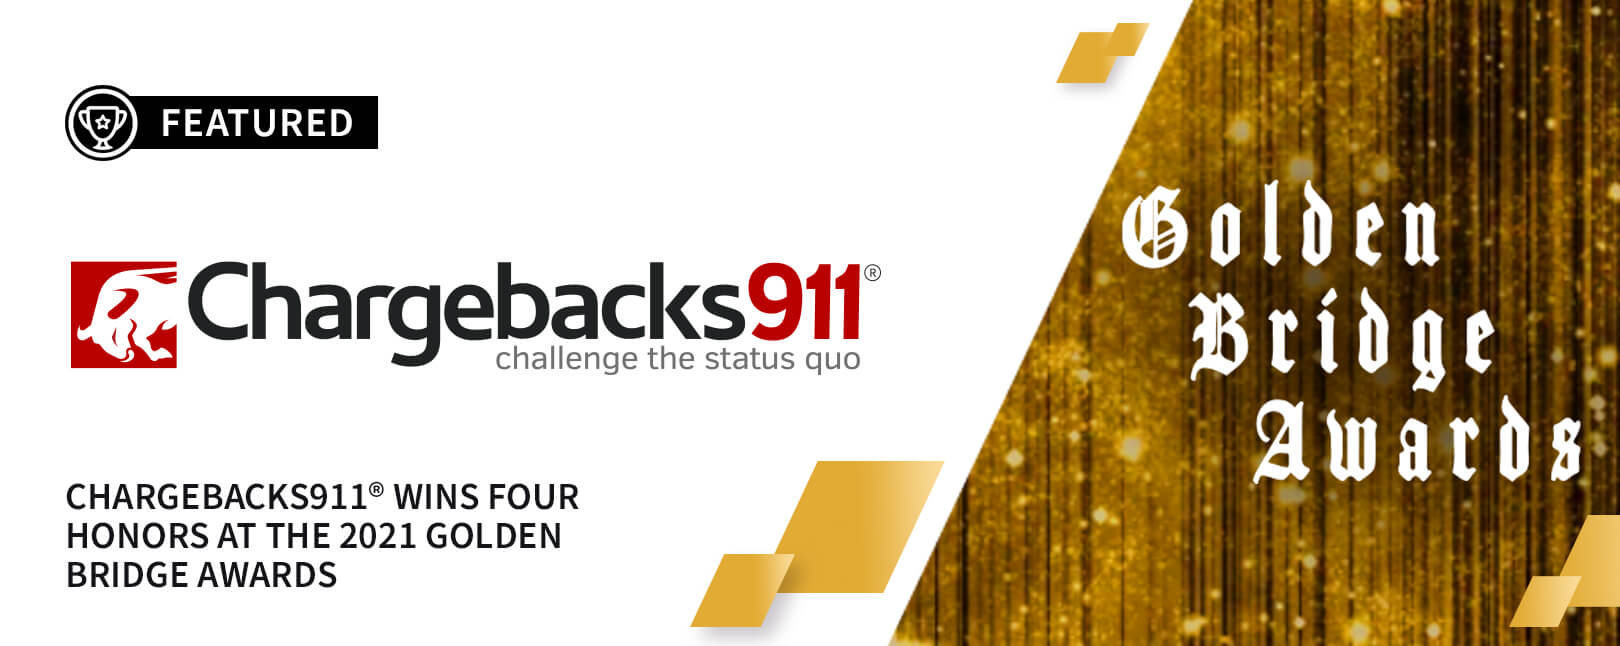 Chargebacks911® Wins 4 Honors at the 2021 Golden Bridge Awards